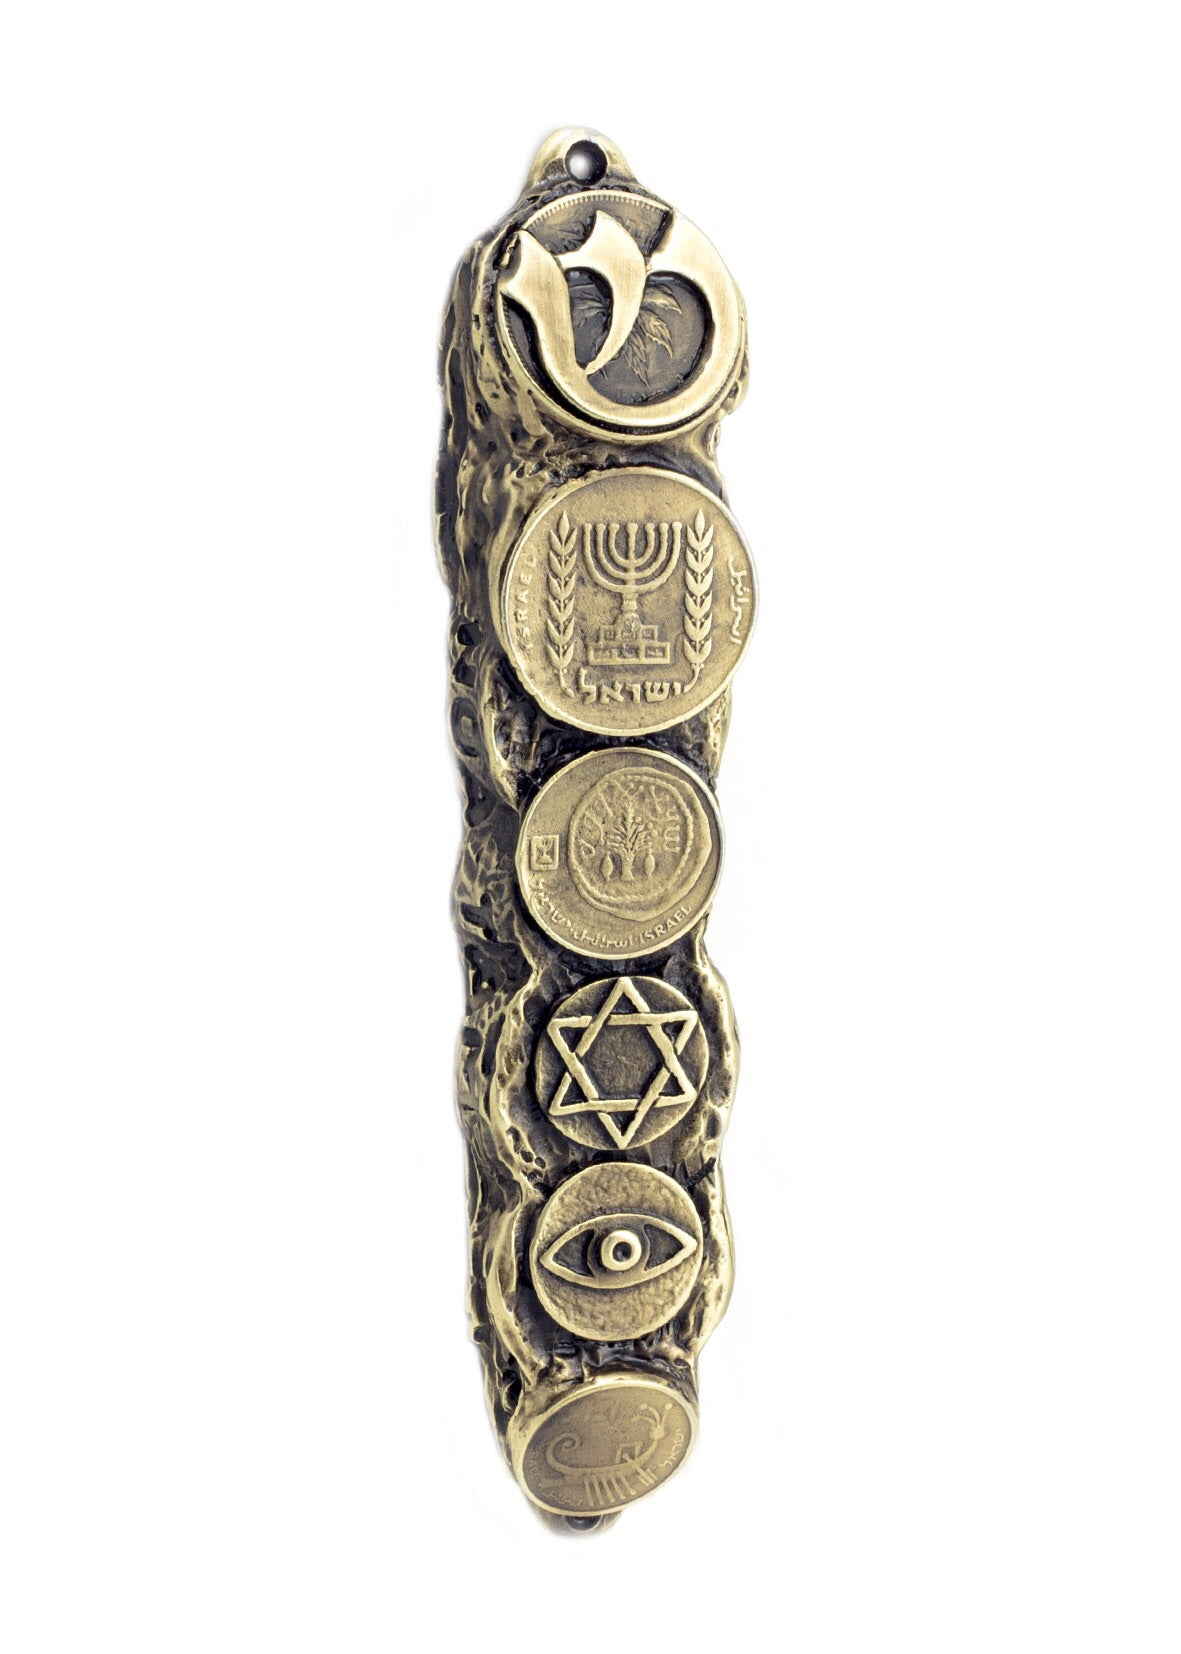 Bronze Mezuzah Case, Mezuzah with Scroll for Door, Ornate Mezuzah, Intricate Royal Mezzuzahs, Judaica Gifts for Home